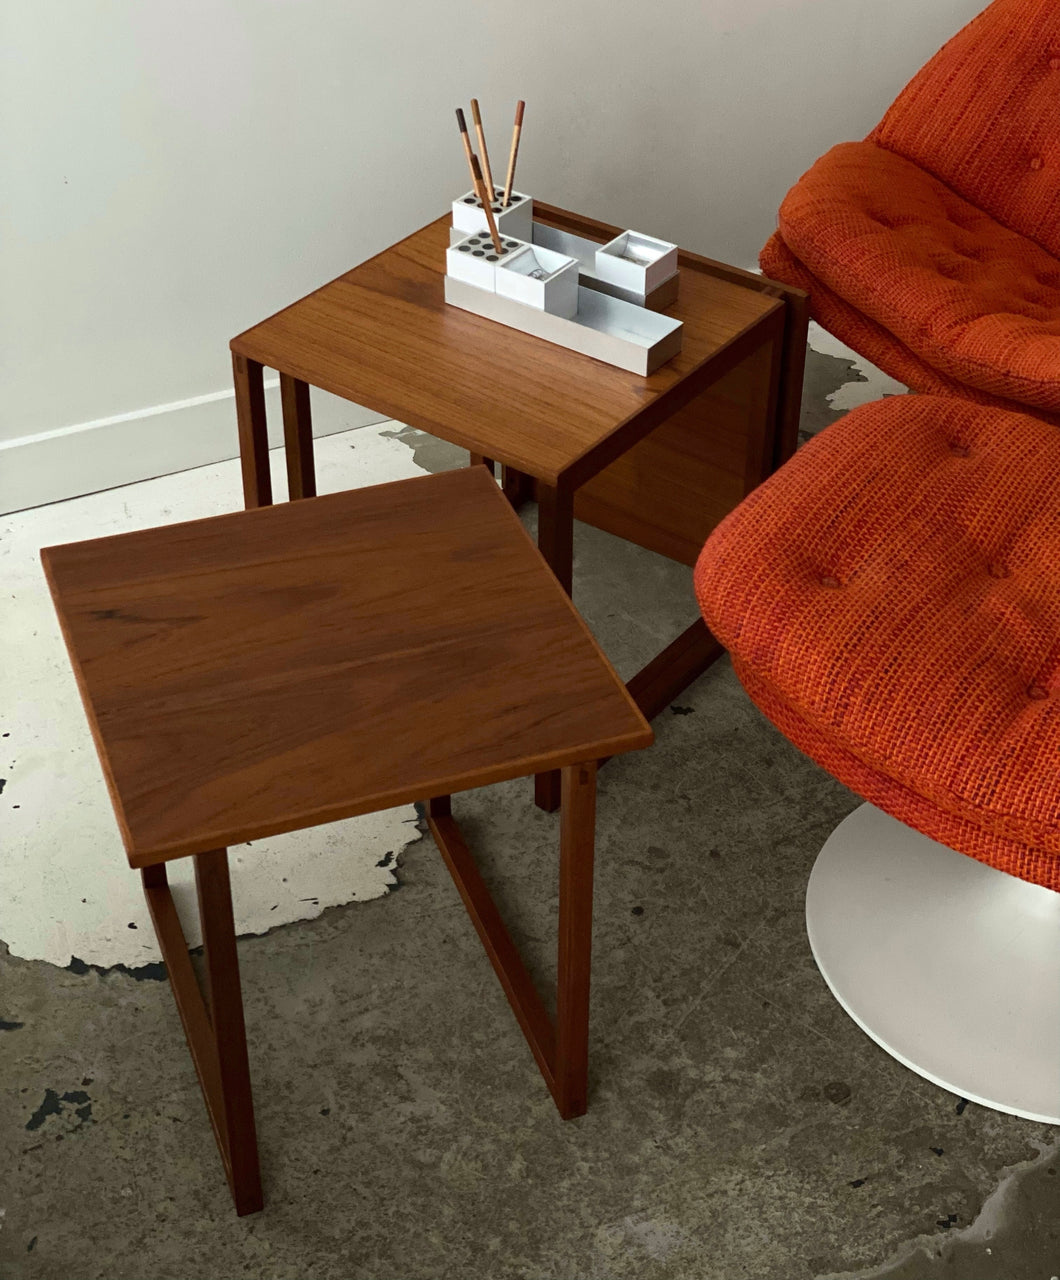 Interlocking teak side tables by Kai Kristiansen for Vildbjerg Møbelfabrik